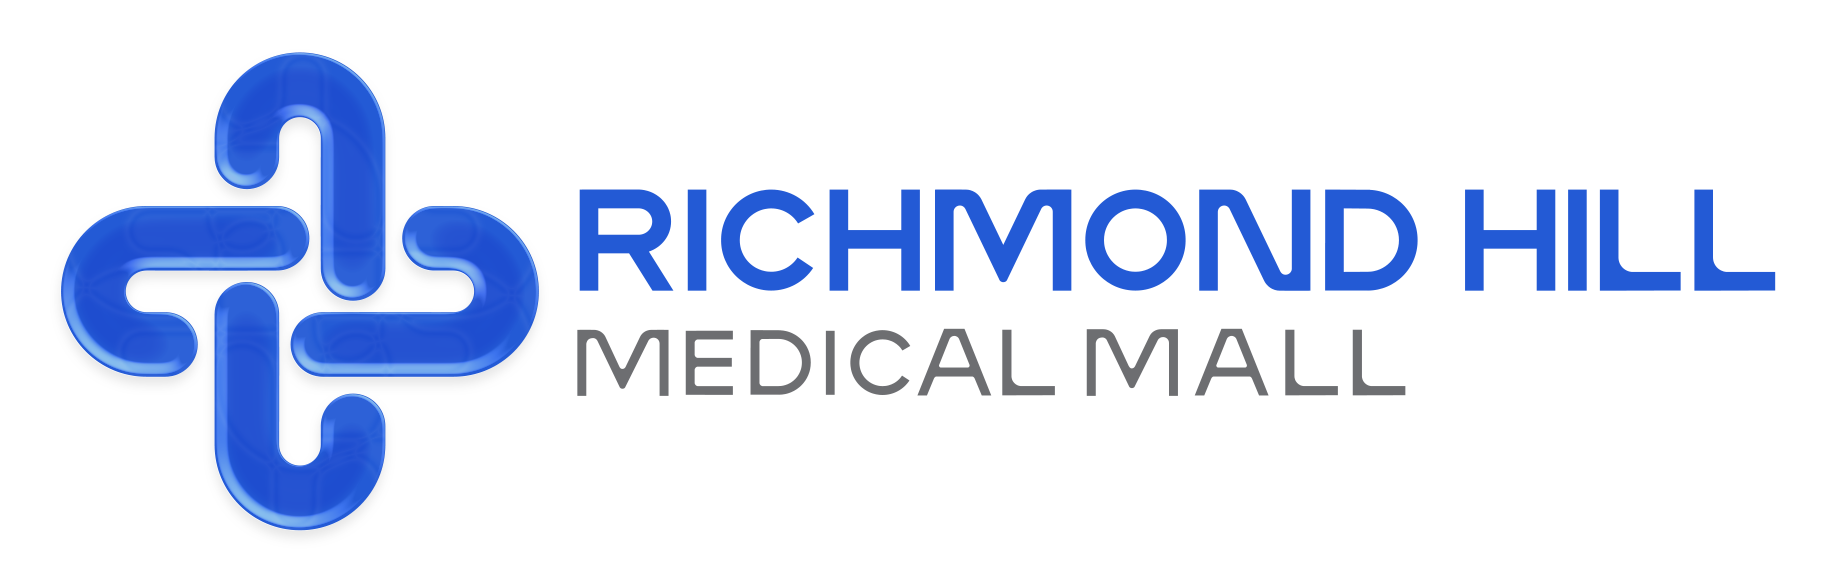 Richmond hill Medical Mall